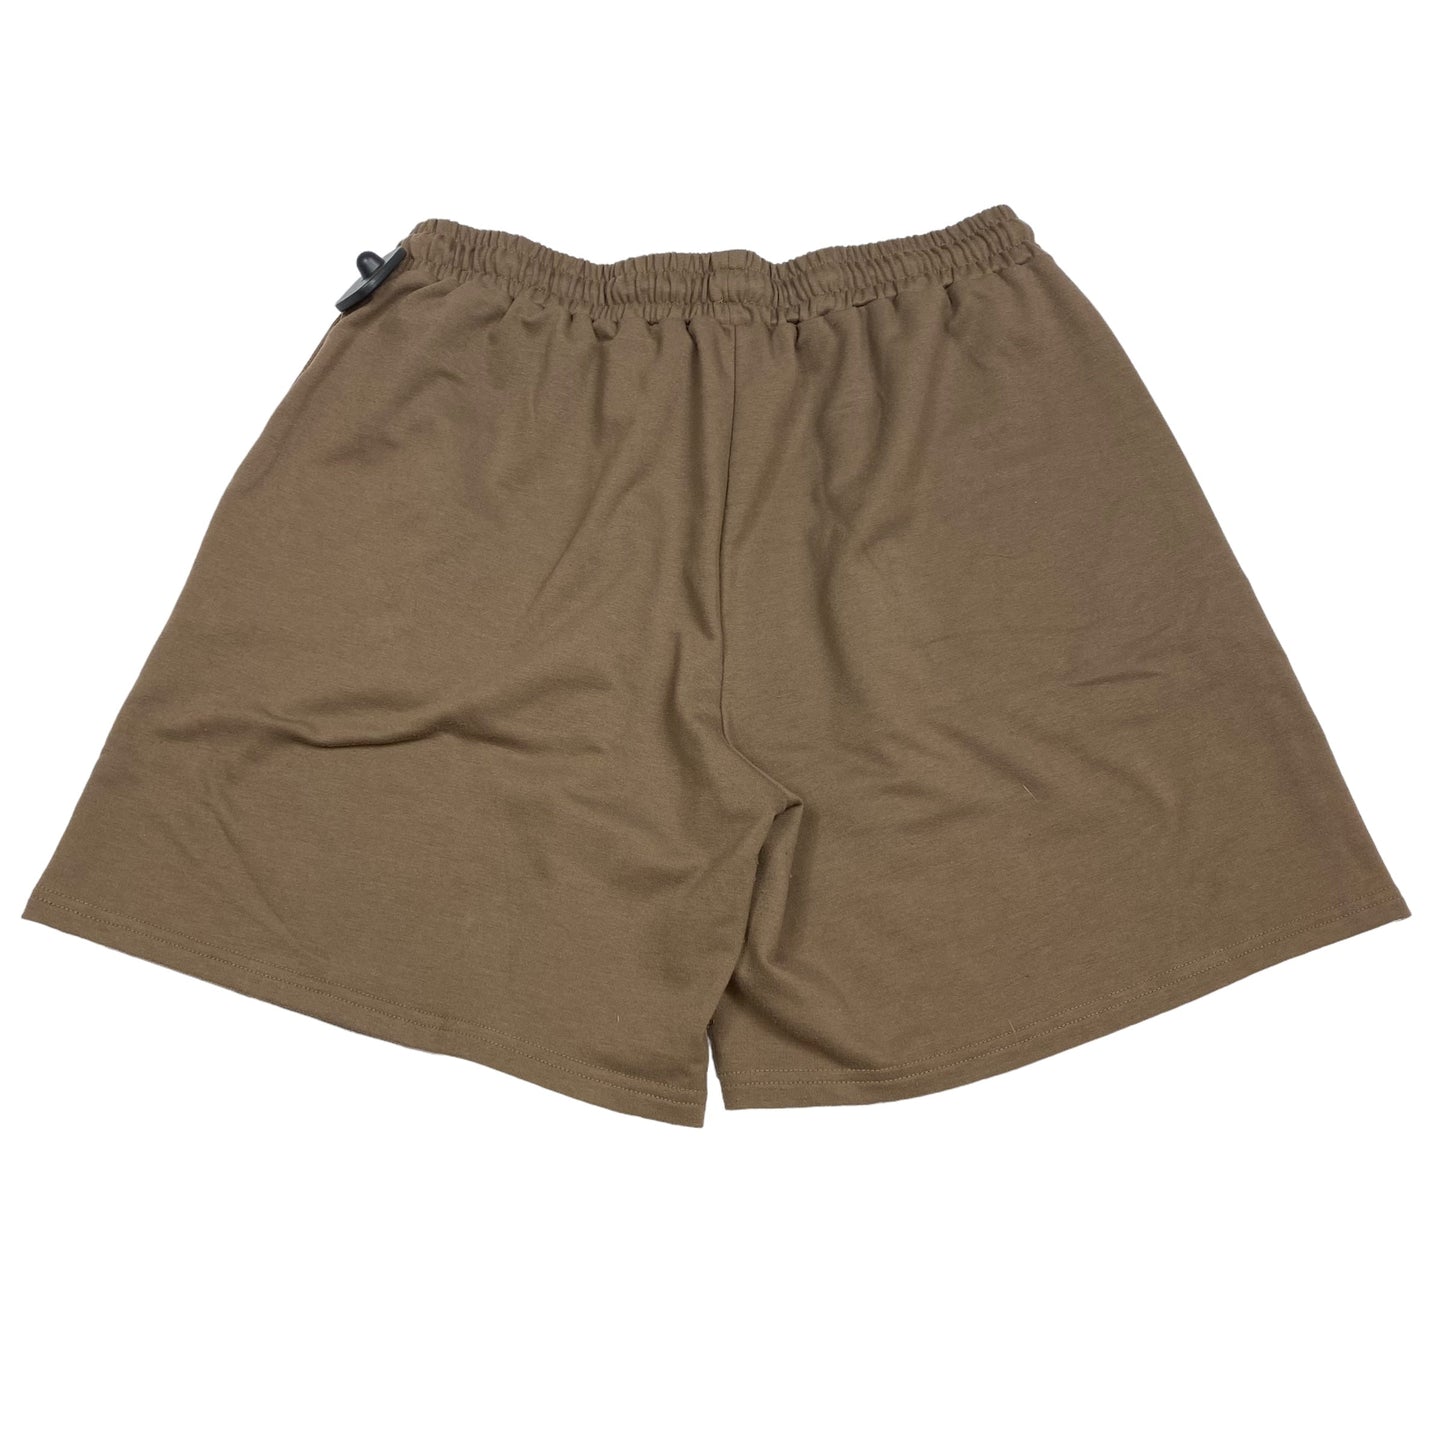 Shorts By Cmf  Size: Xl